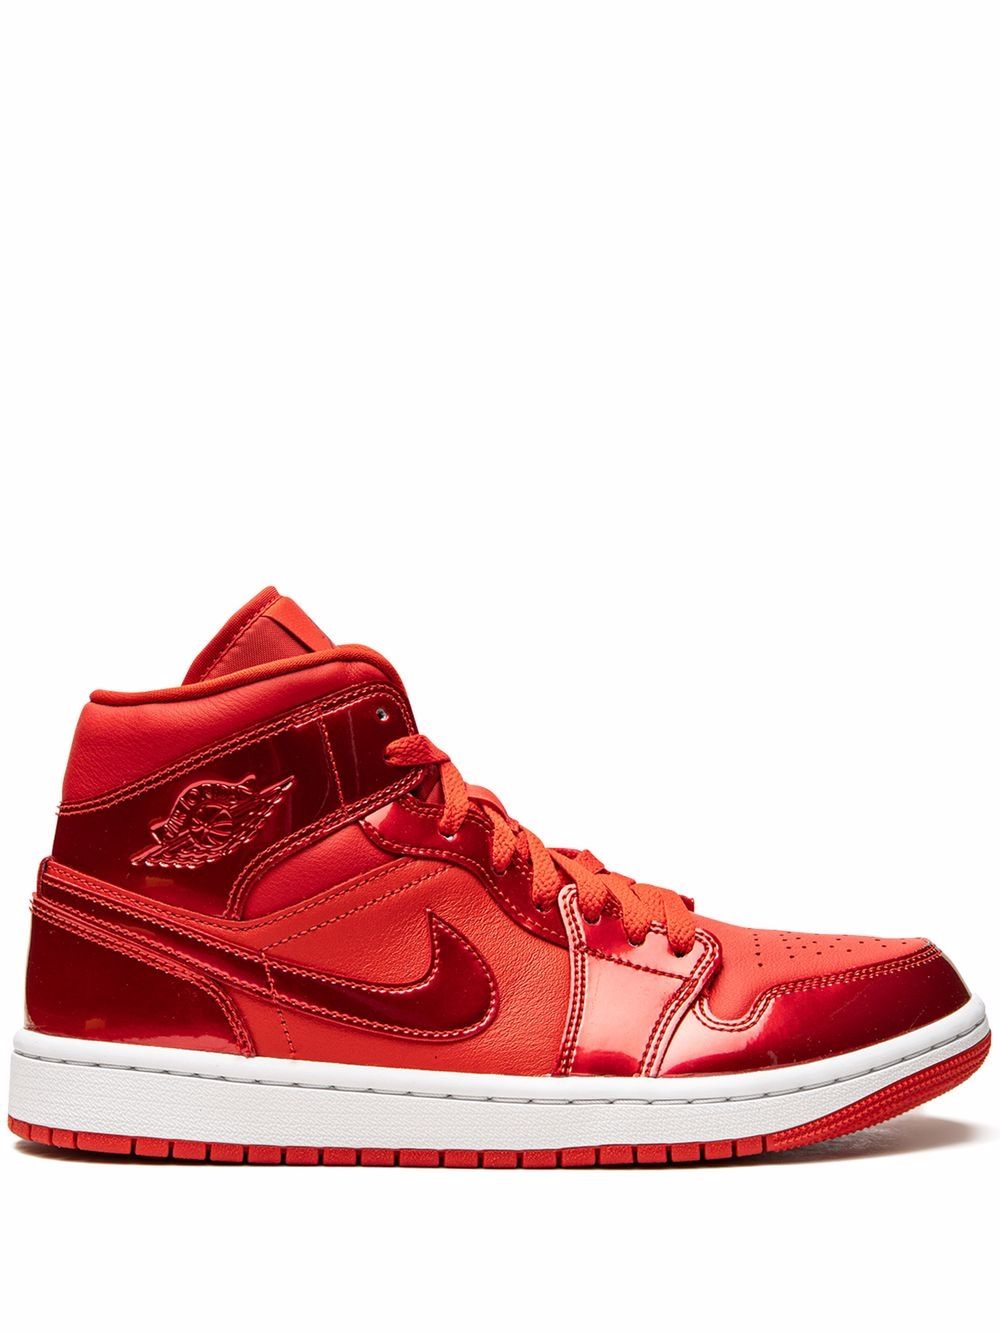 Jordan Air Jordan 1 Mid "Pomegranate" sneakers - Red